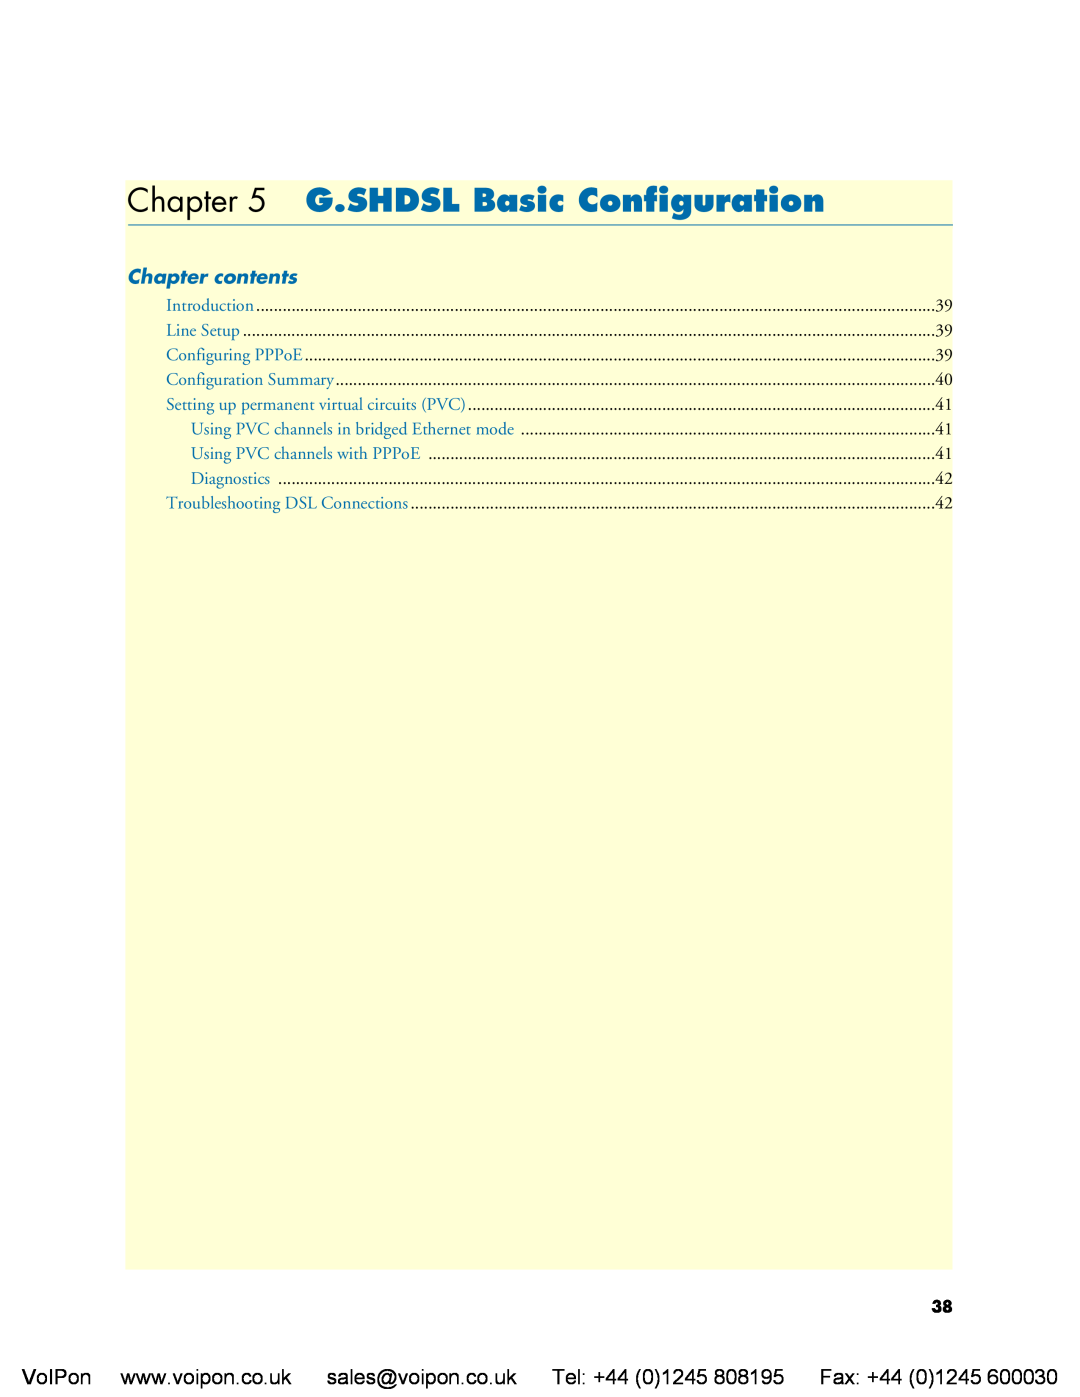 Patton electronic 4960 manual G.SHDSL Basic Conﬁguration, Chapter contents 